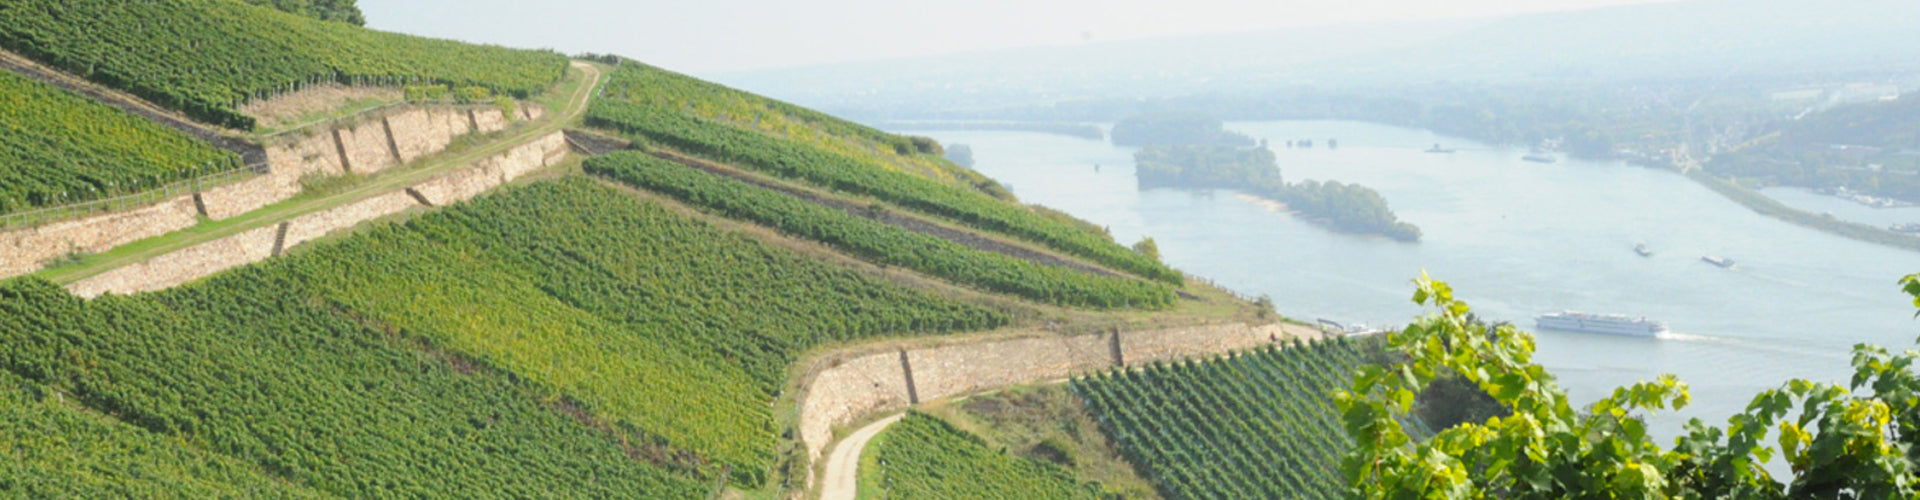 The Rheingau Wine Region of Germany